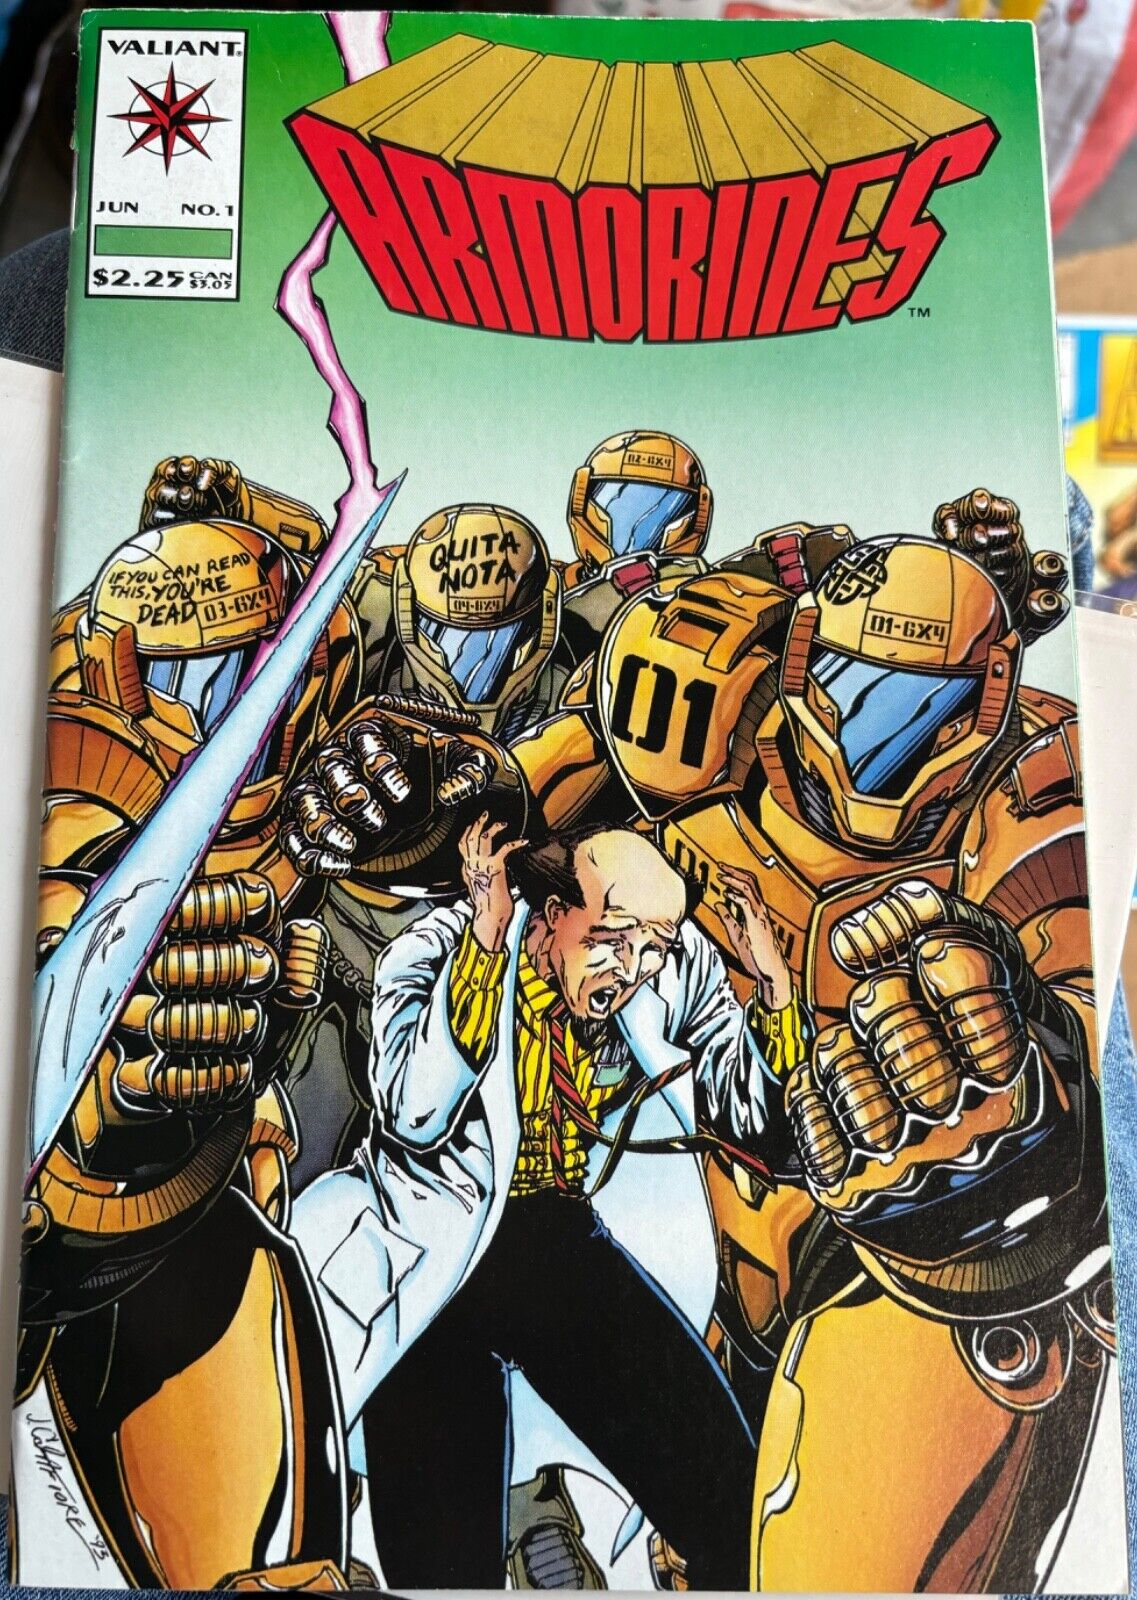 Valiant Comics Armorines #1 (Jun 1994, Acclaim / Valiant) Harbinger